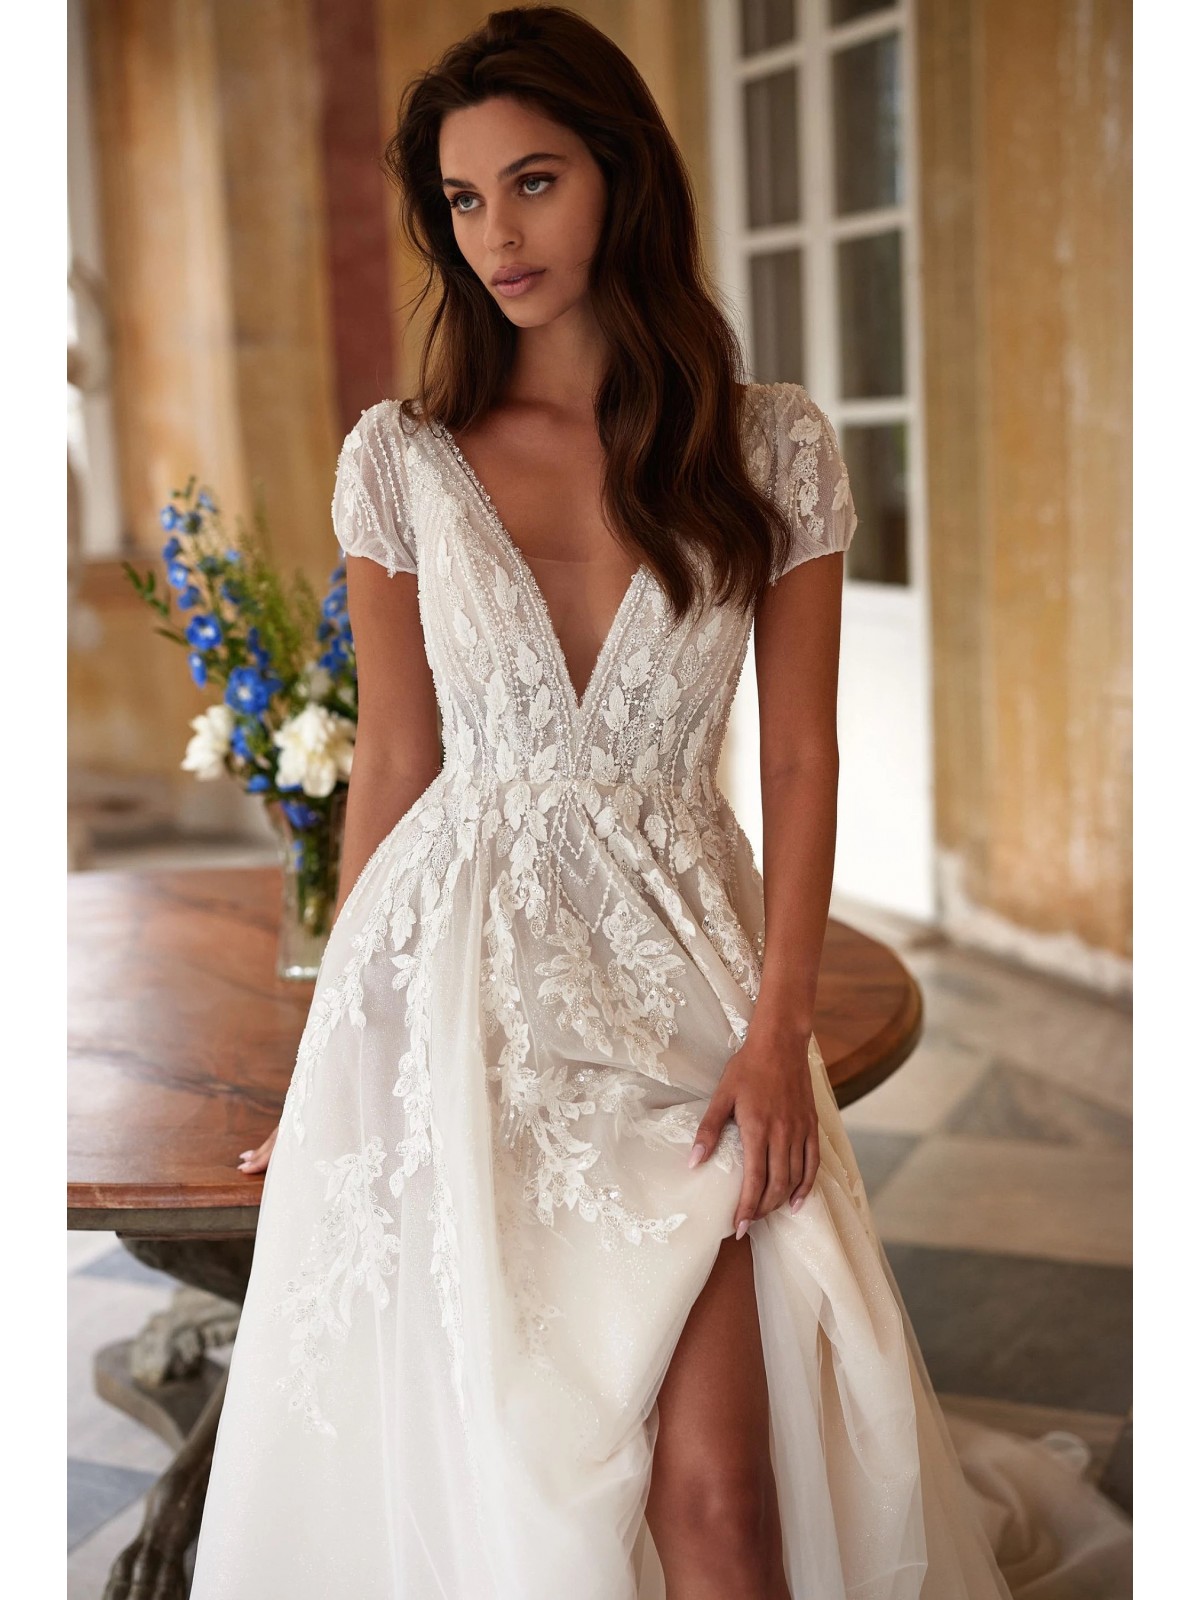 Luxury Wedding Dress - A-line Deep V-neck Beading and Skirt with Lining - Splendora - LIDA-01353.42.17